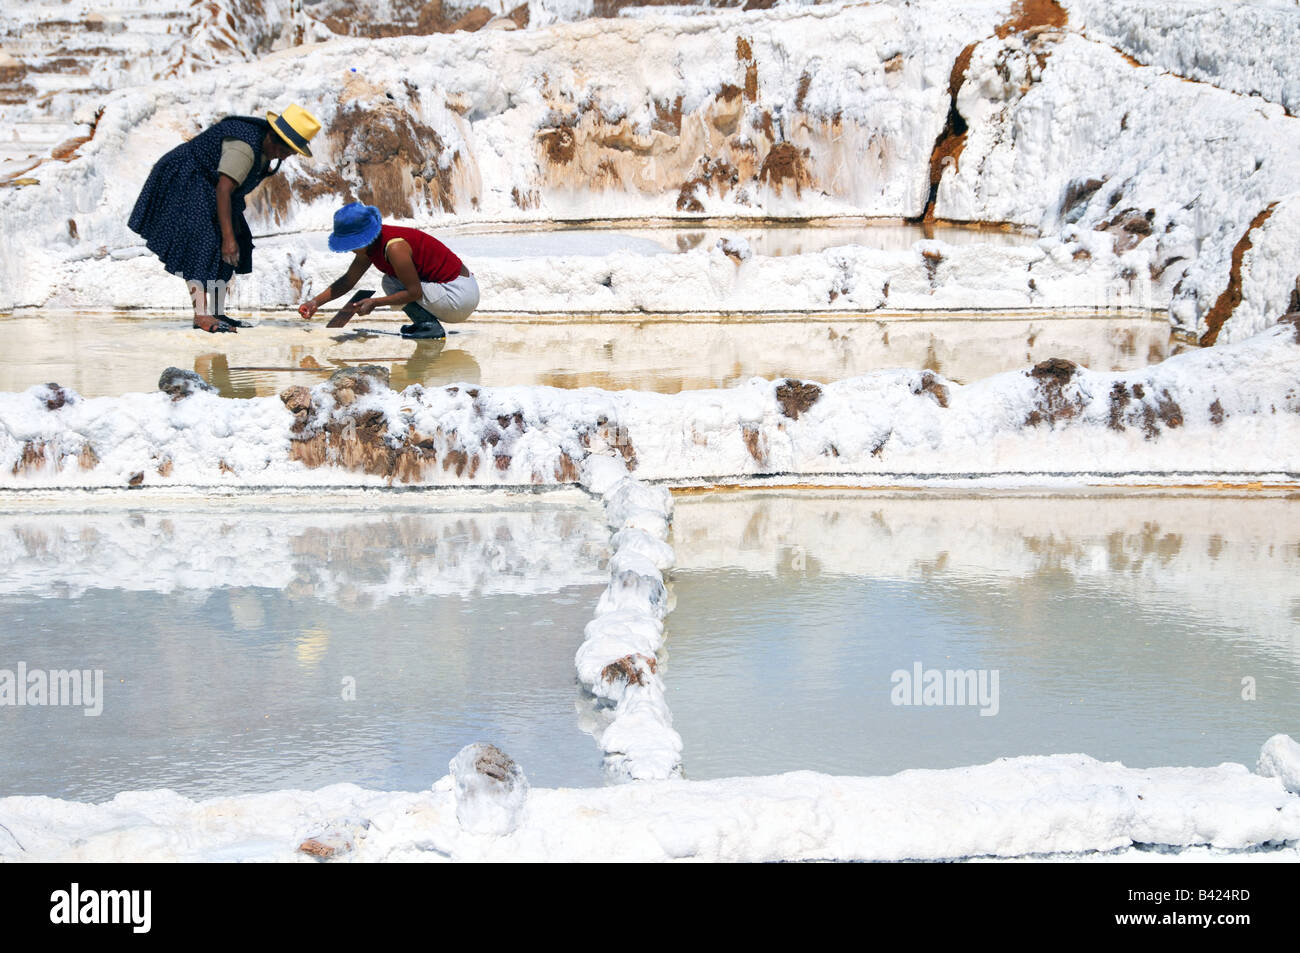 Two Indian women work extracting salt in the salt pools of Salineras de Mara near Cuzco, Peru. Stock Photo